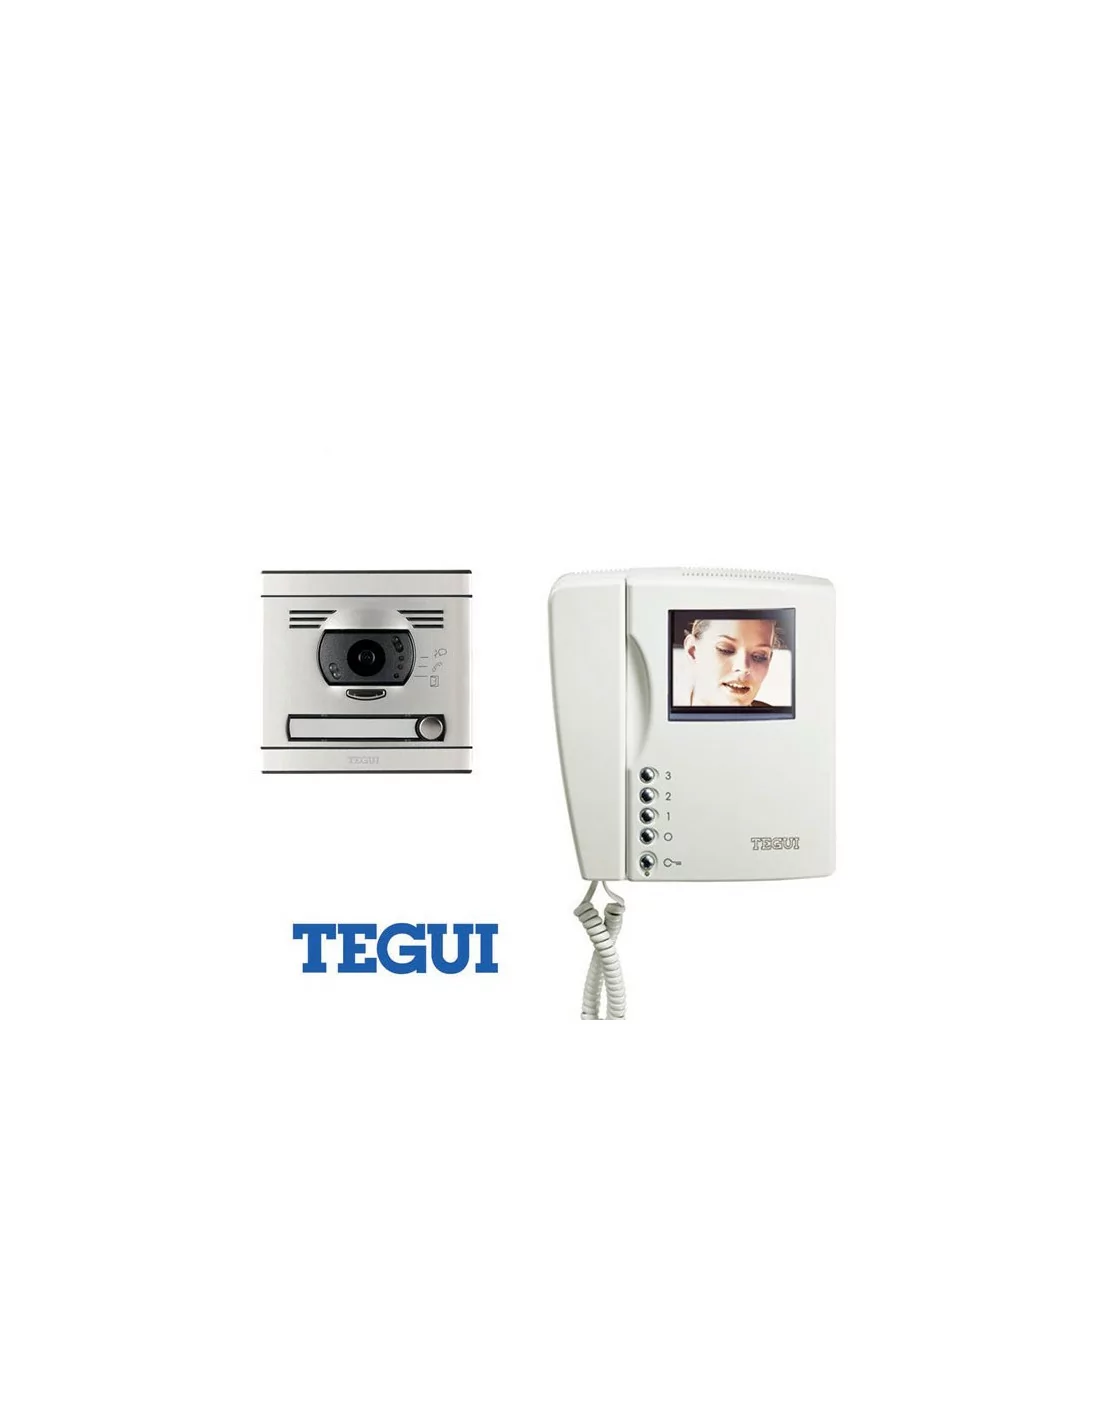 TEGUI - Kit Videoportero Color 2 Hilos 1 Linea Monitor Swing y Placa S7  TEGUI 376026 